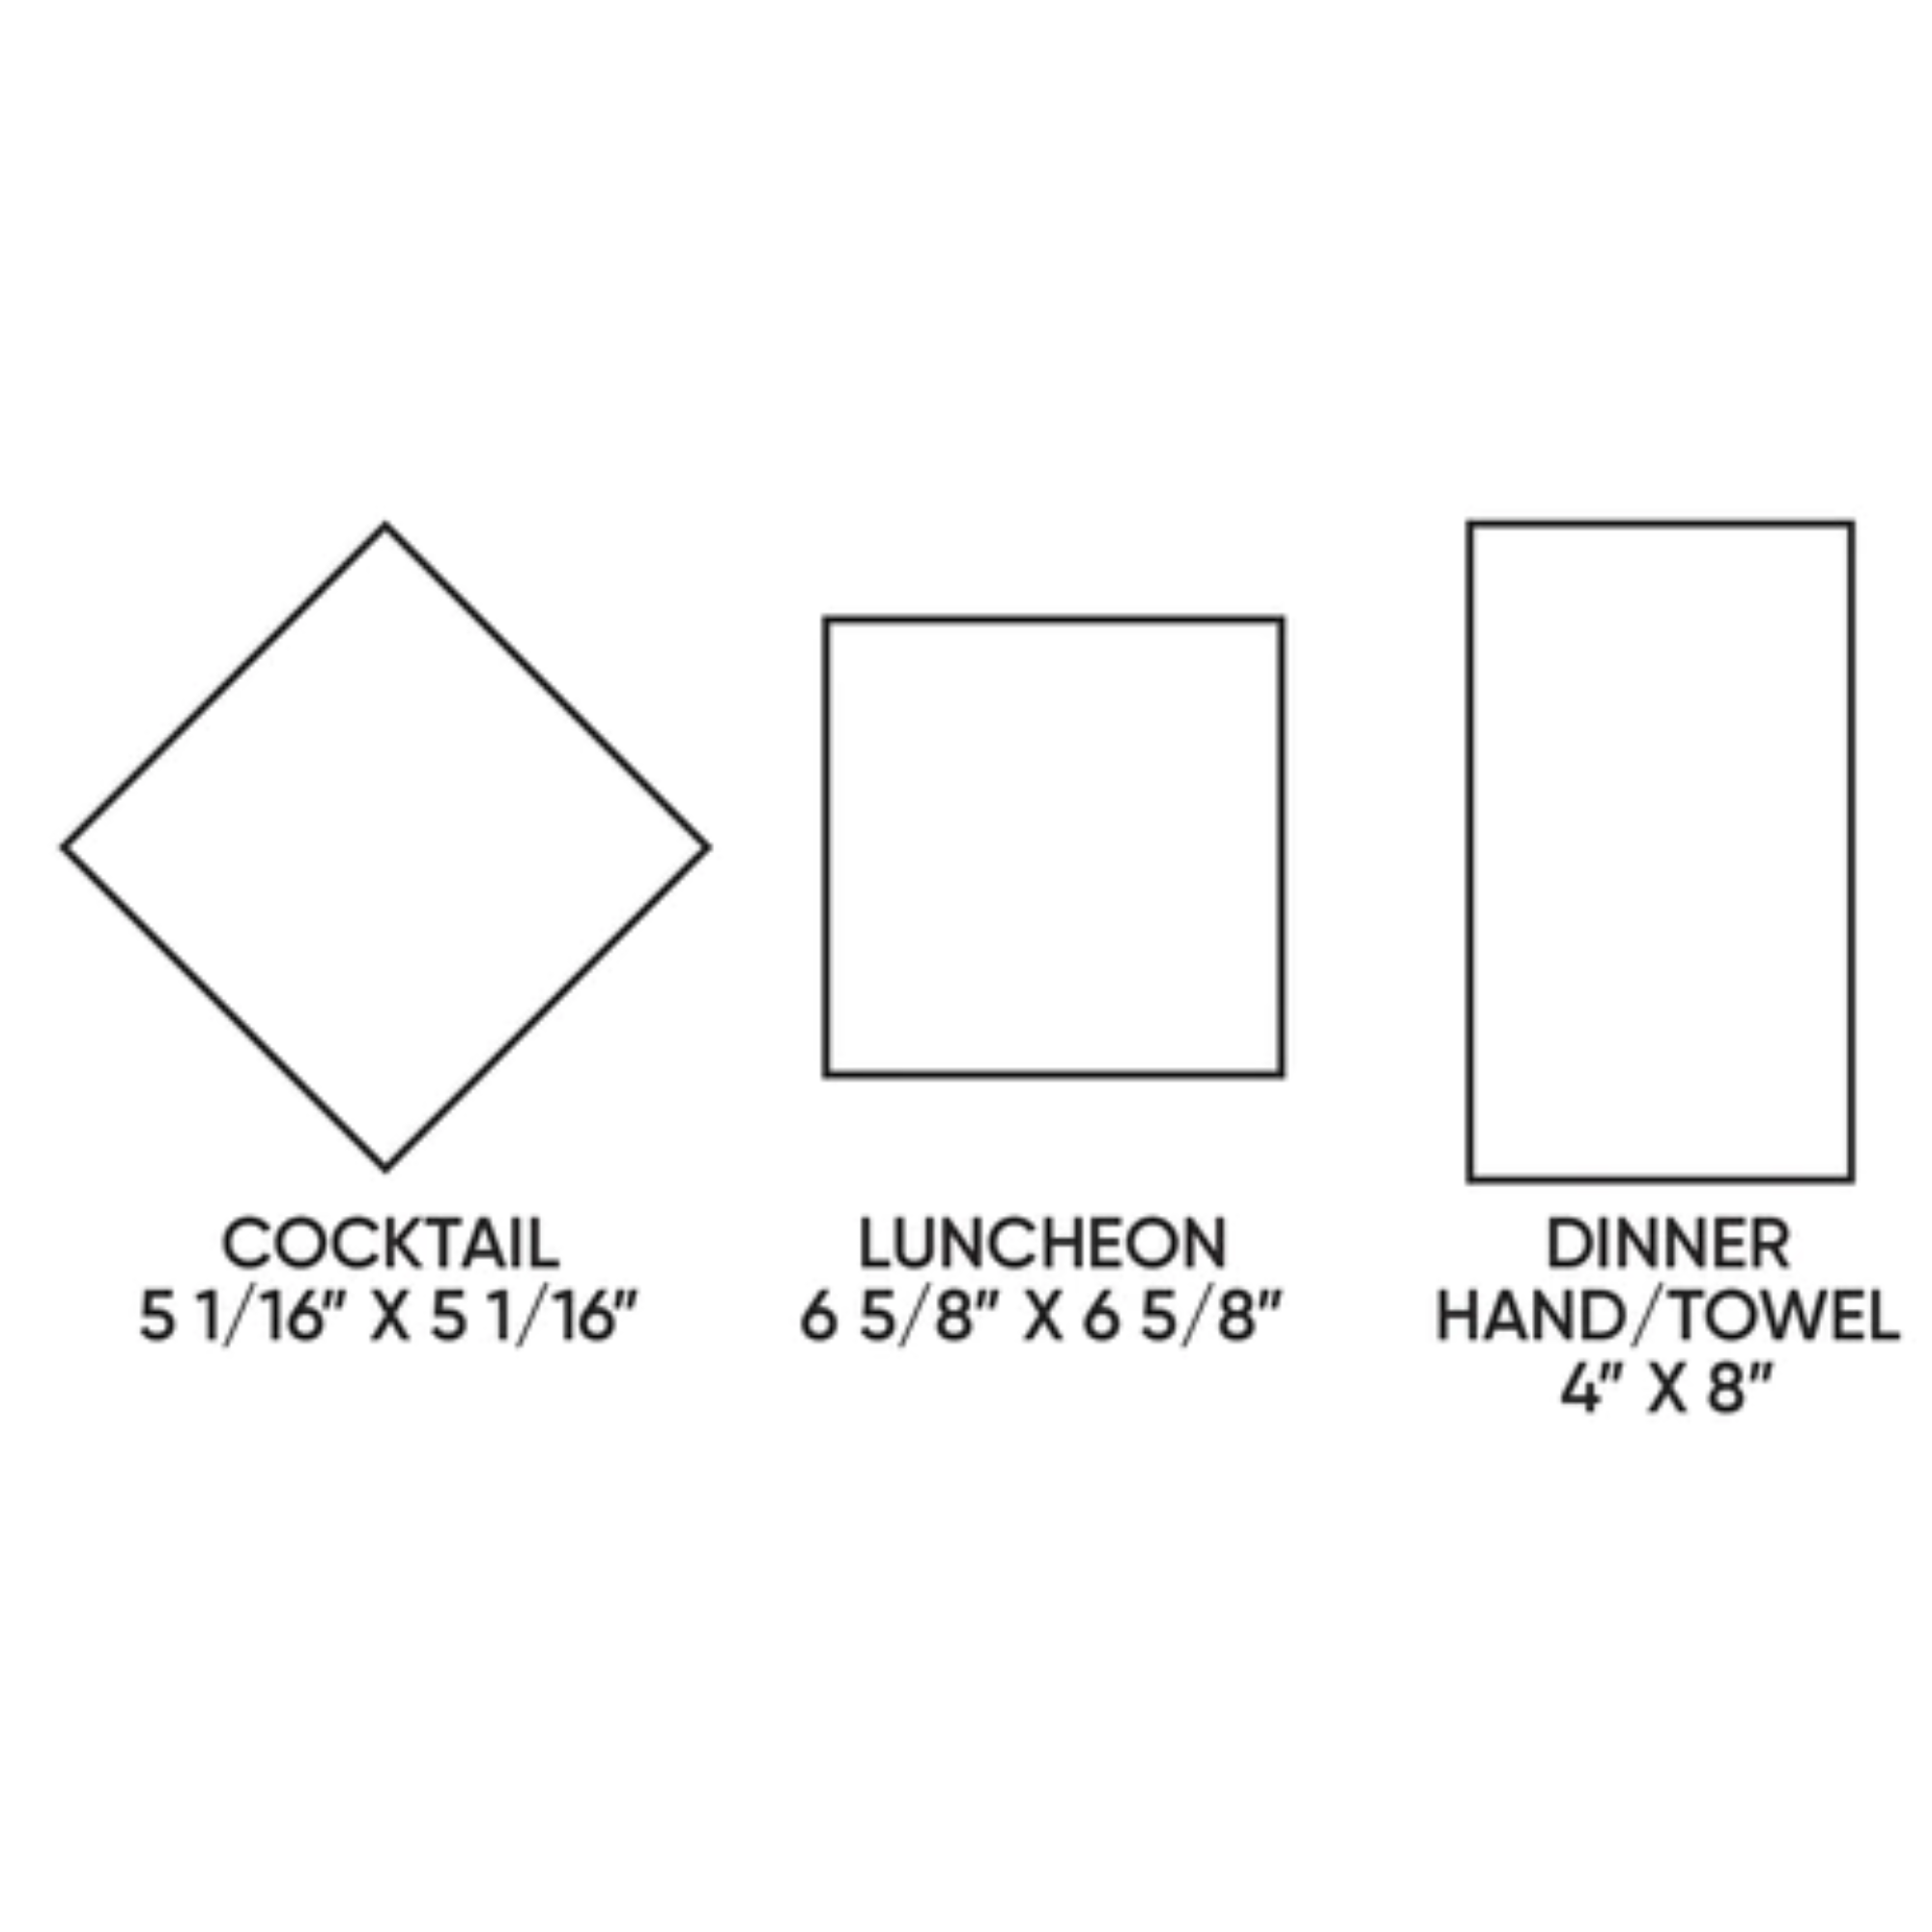 cocktail napkin, 5 1/16" x 5 1/16", luncheon napkin, 6 5/8" x 6 5/8", dinner hand/towel, 4" x 8"